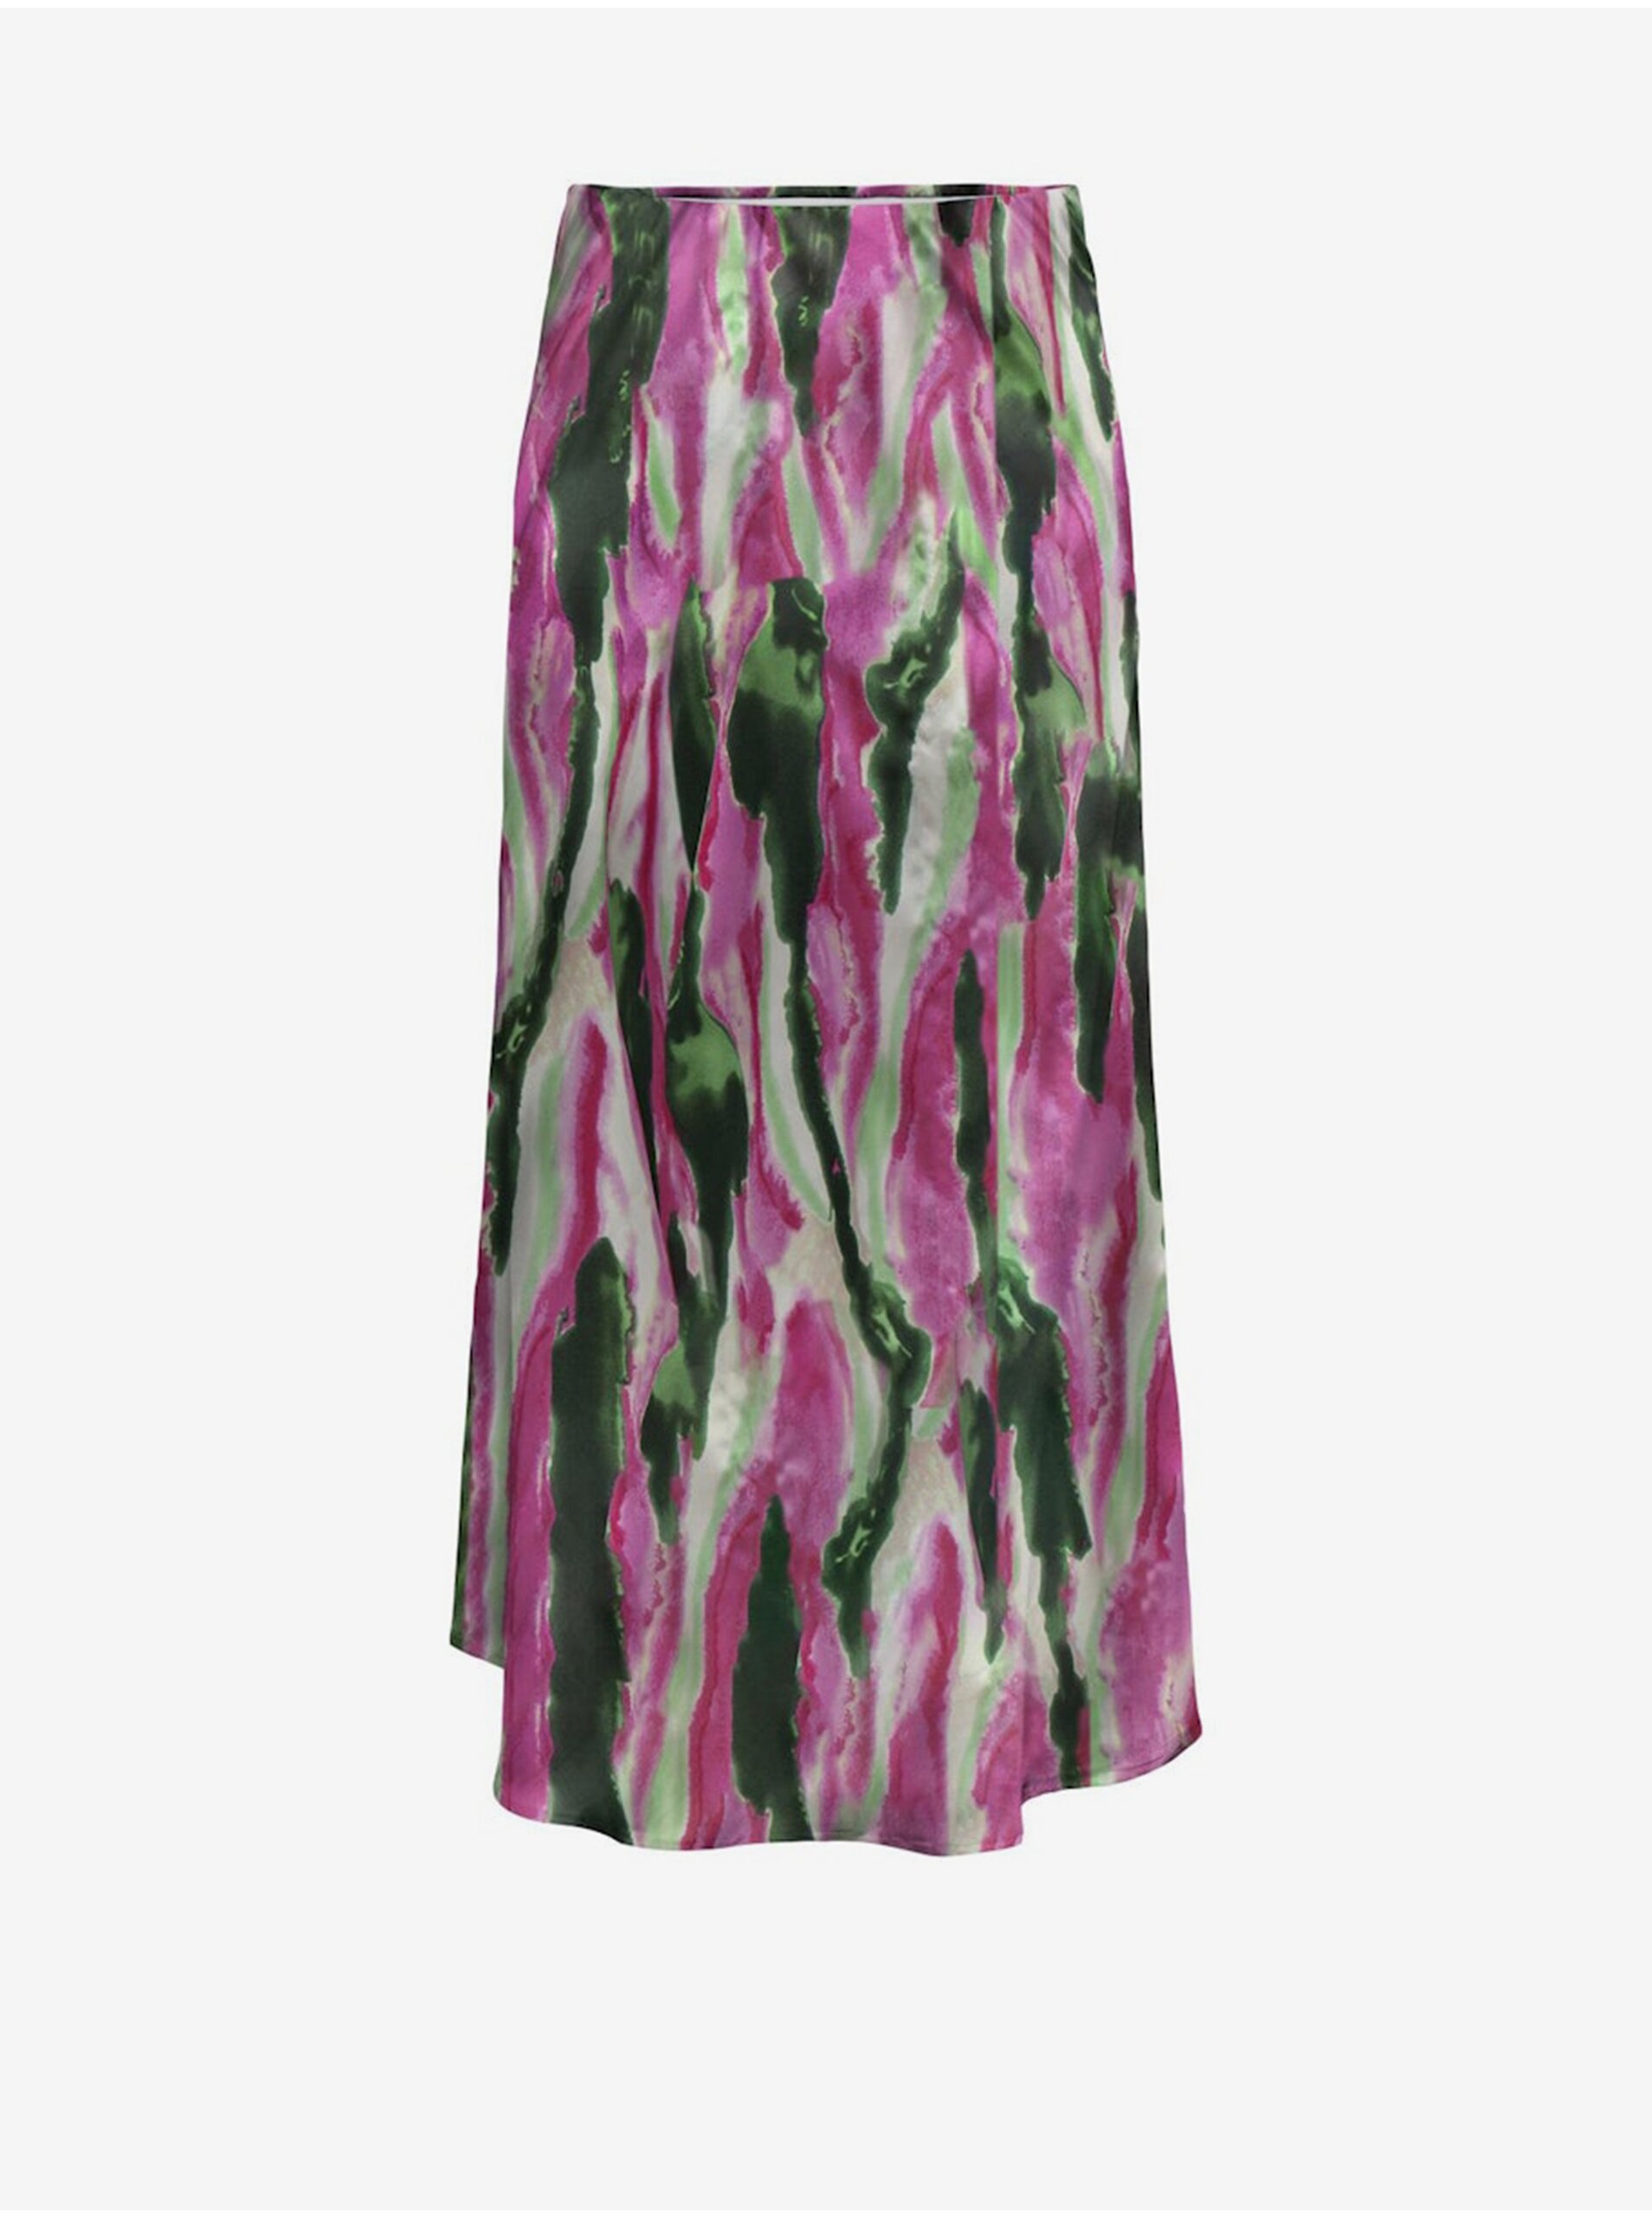 Lacno Zeleno-ružová dámska saténová maxi sukňa ONLY Nathalie